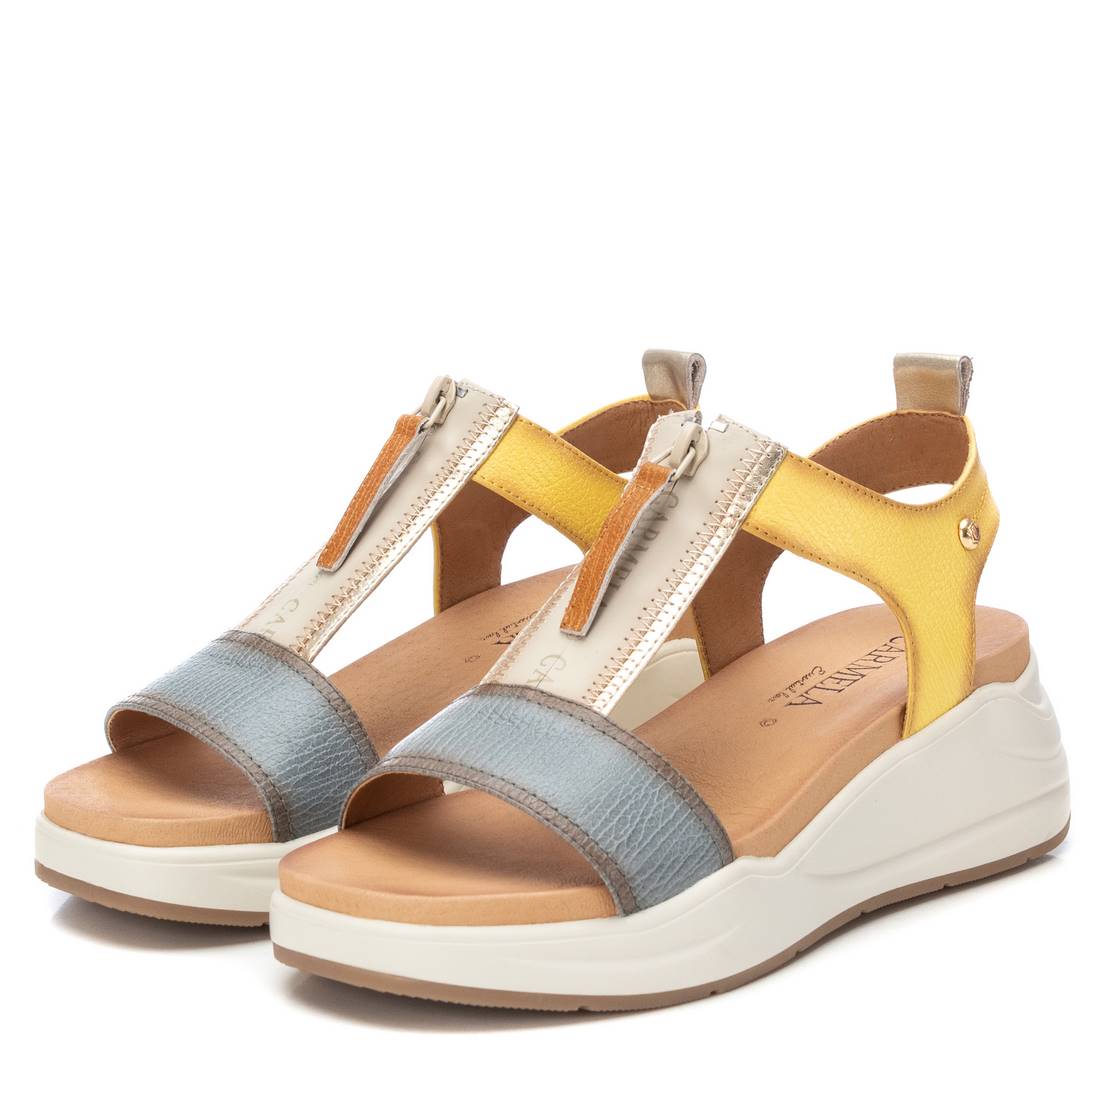 Carmela - Leather Zip Front Sandals in Multi 161550